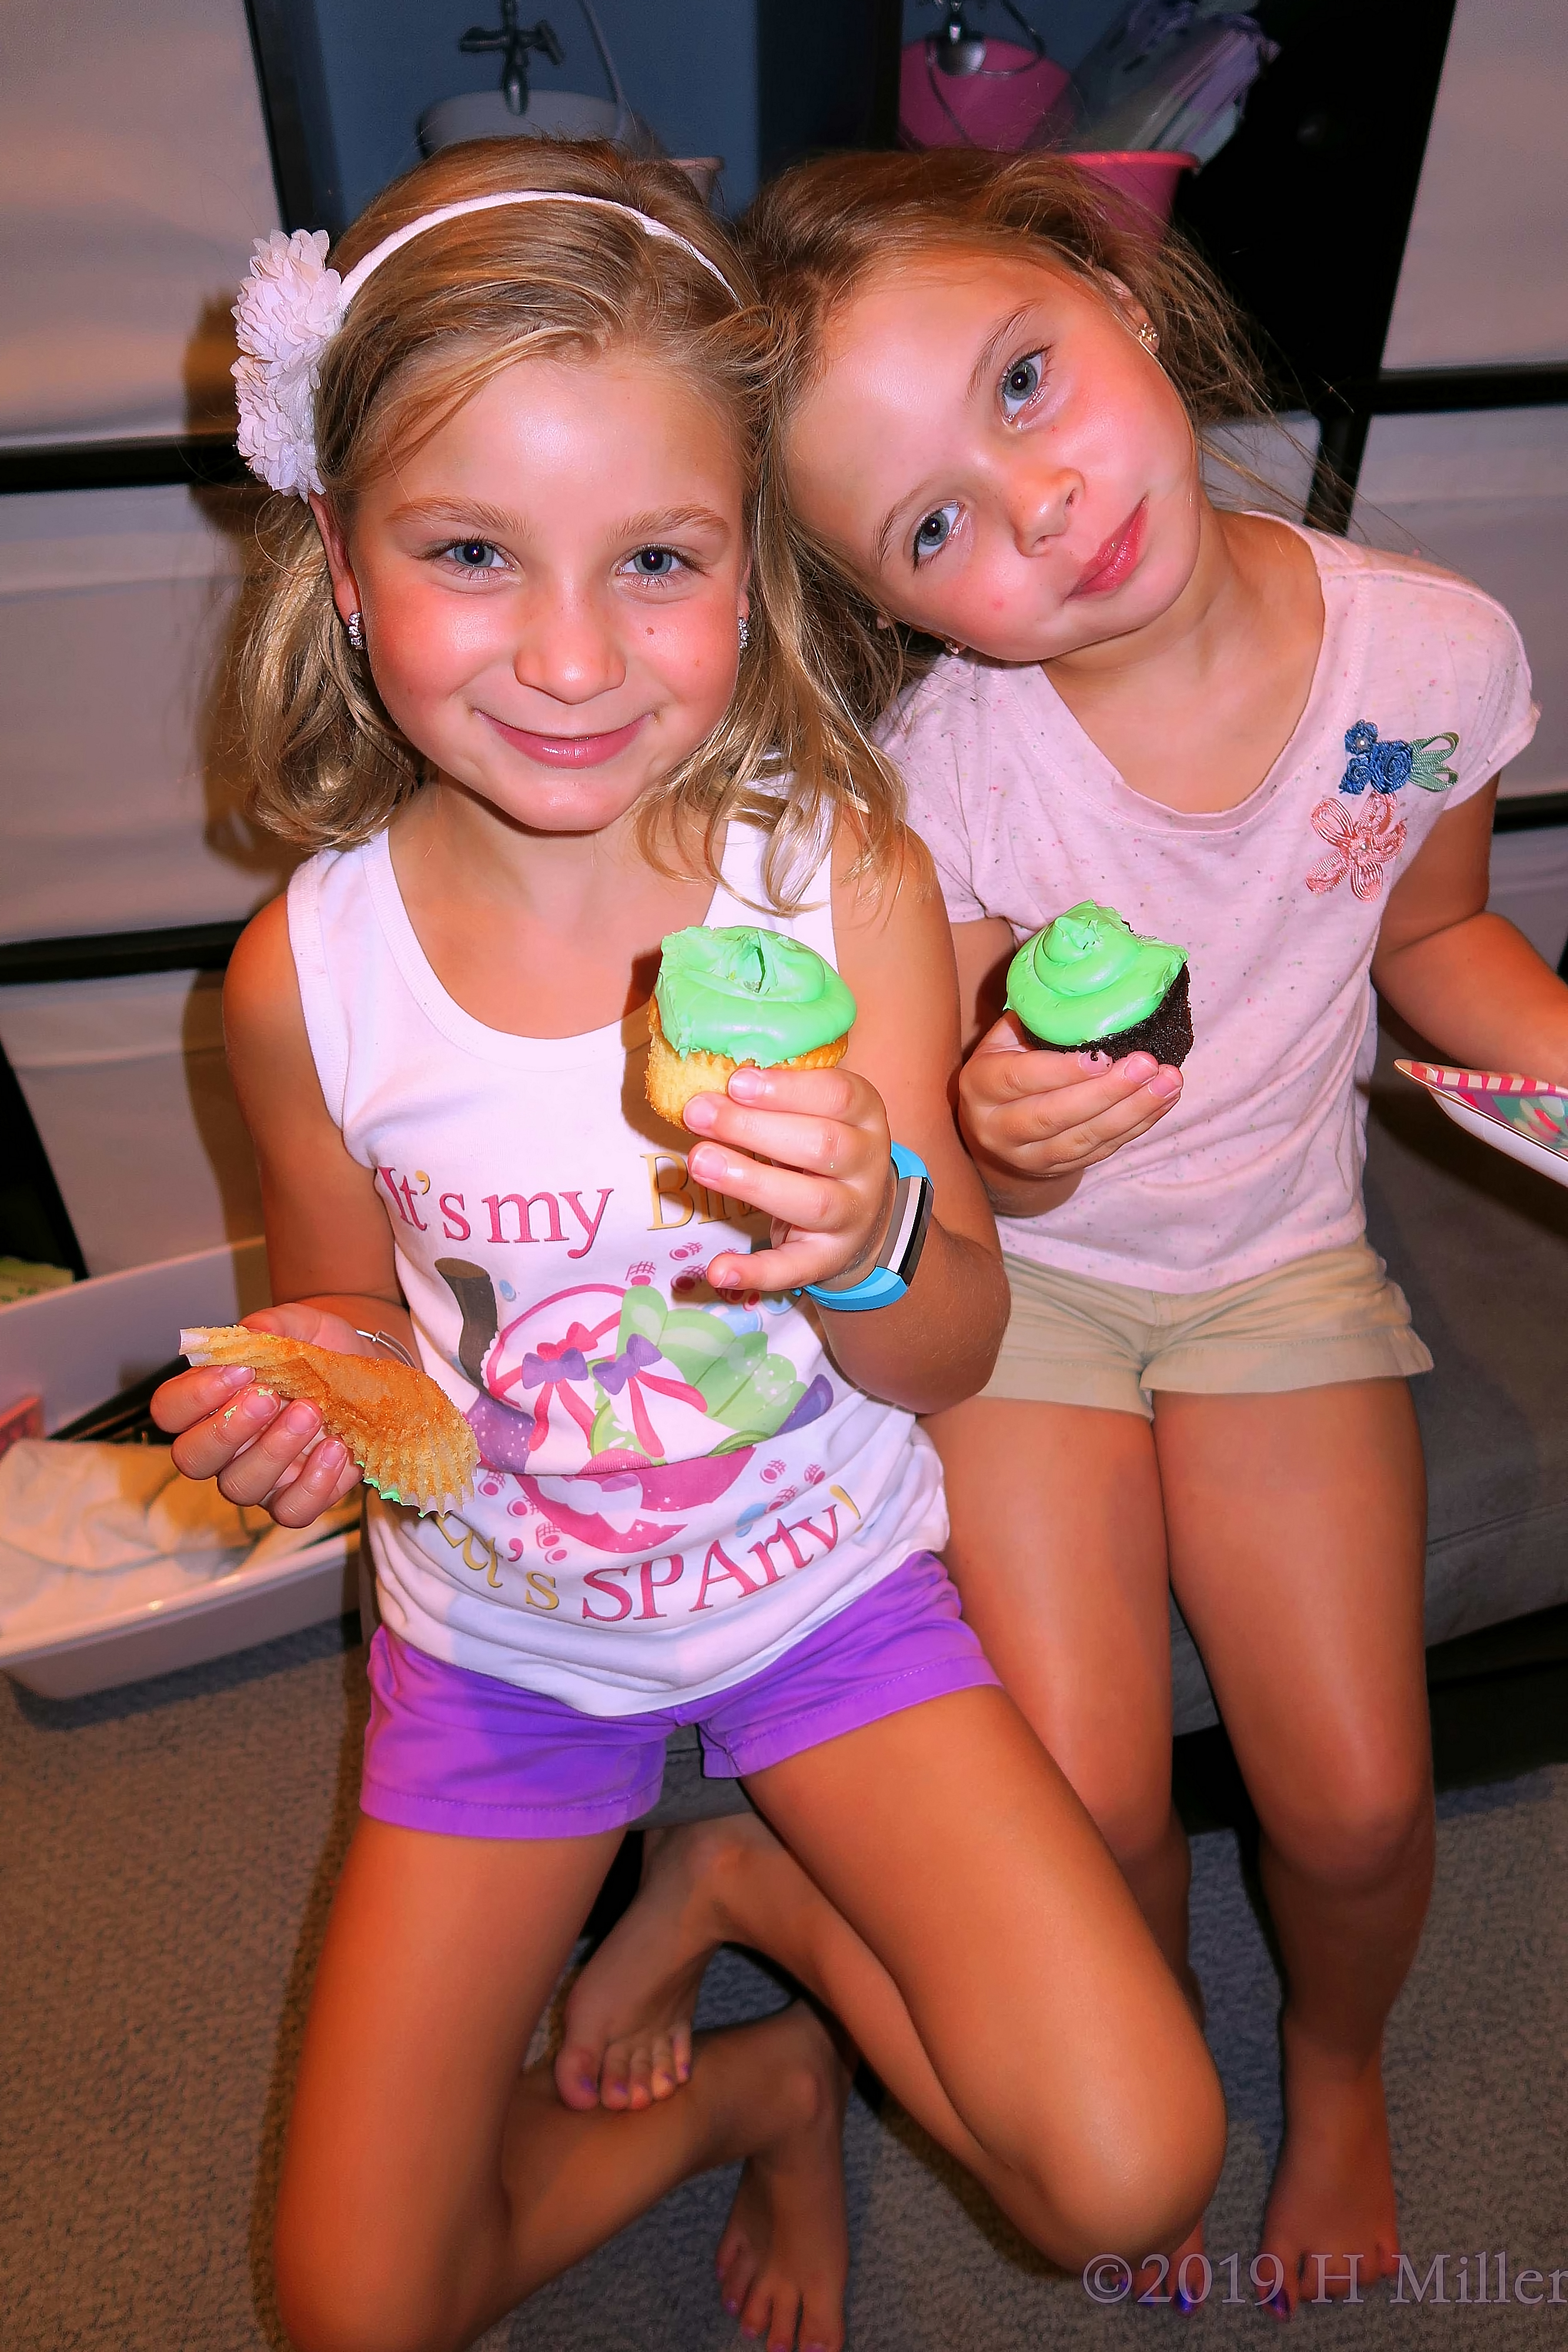 Enjoying Cupcakes Together At The Spa! 4